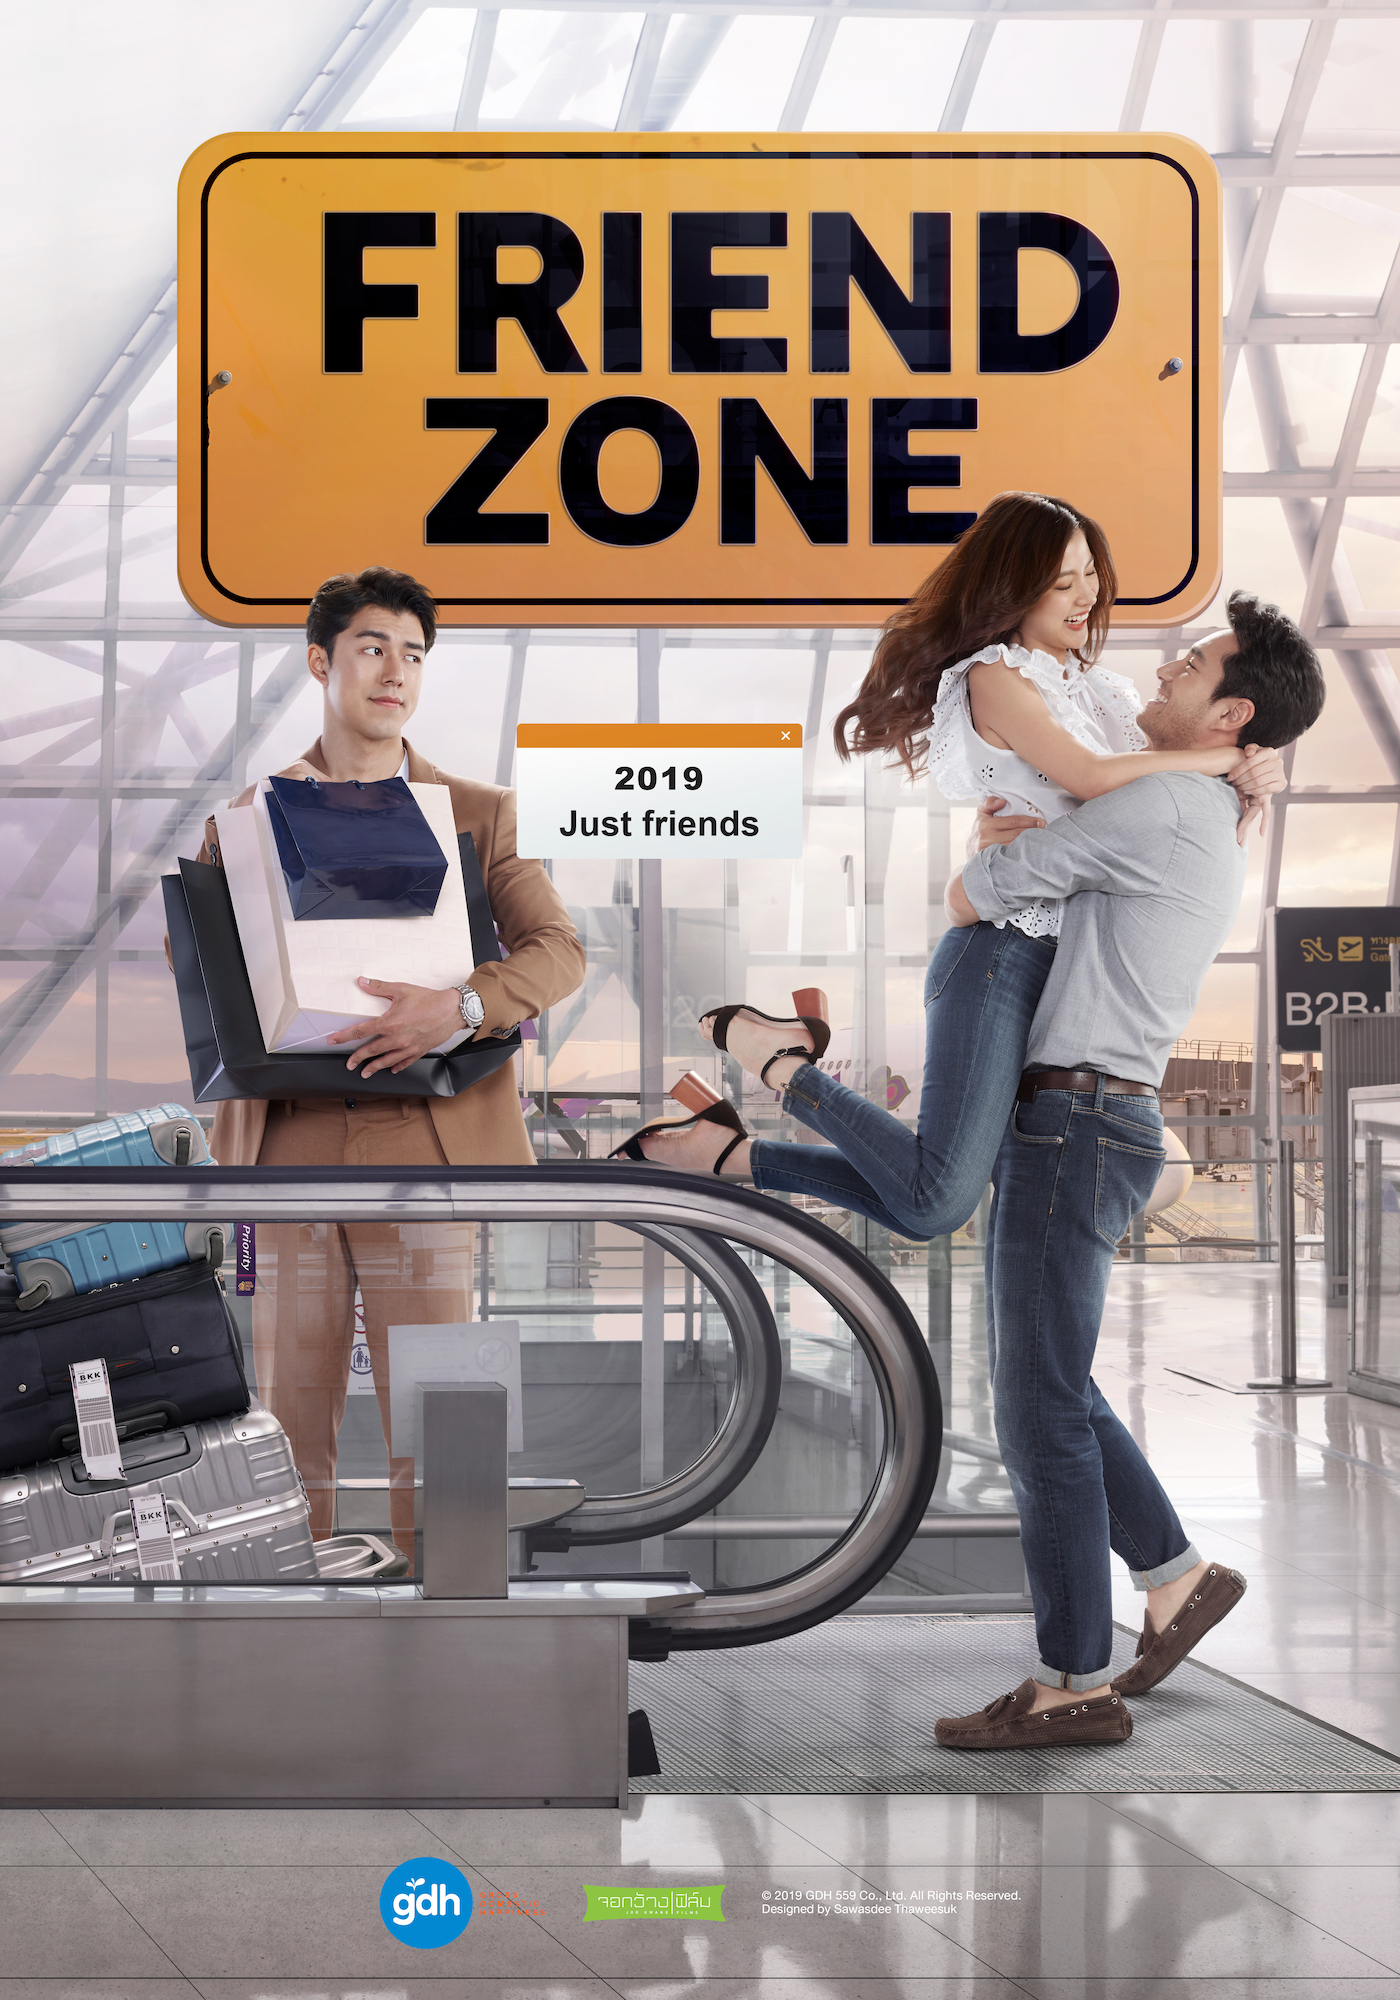 Friend Zone original poster